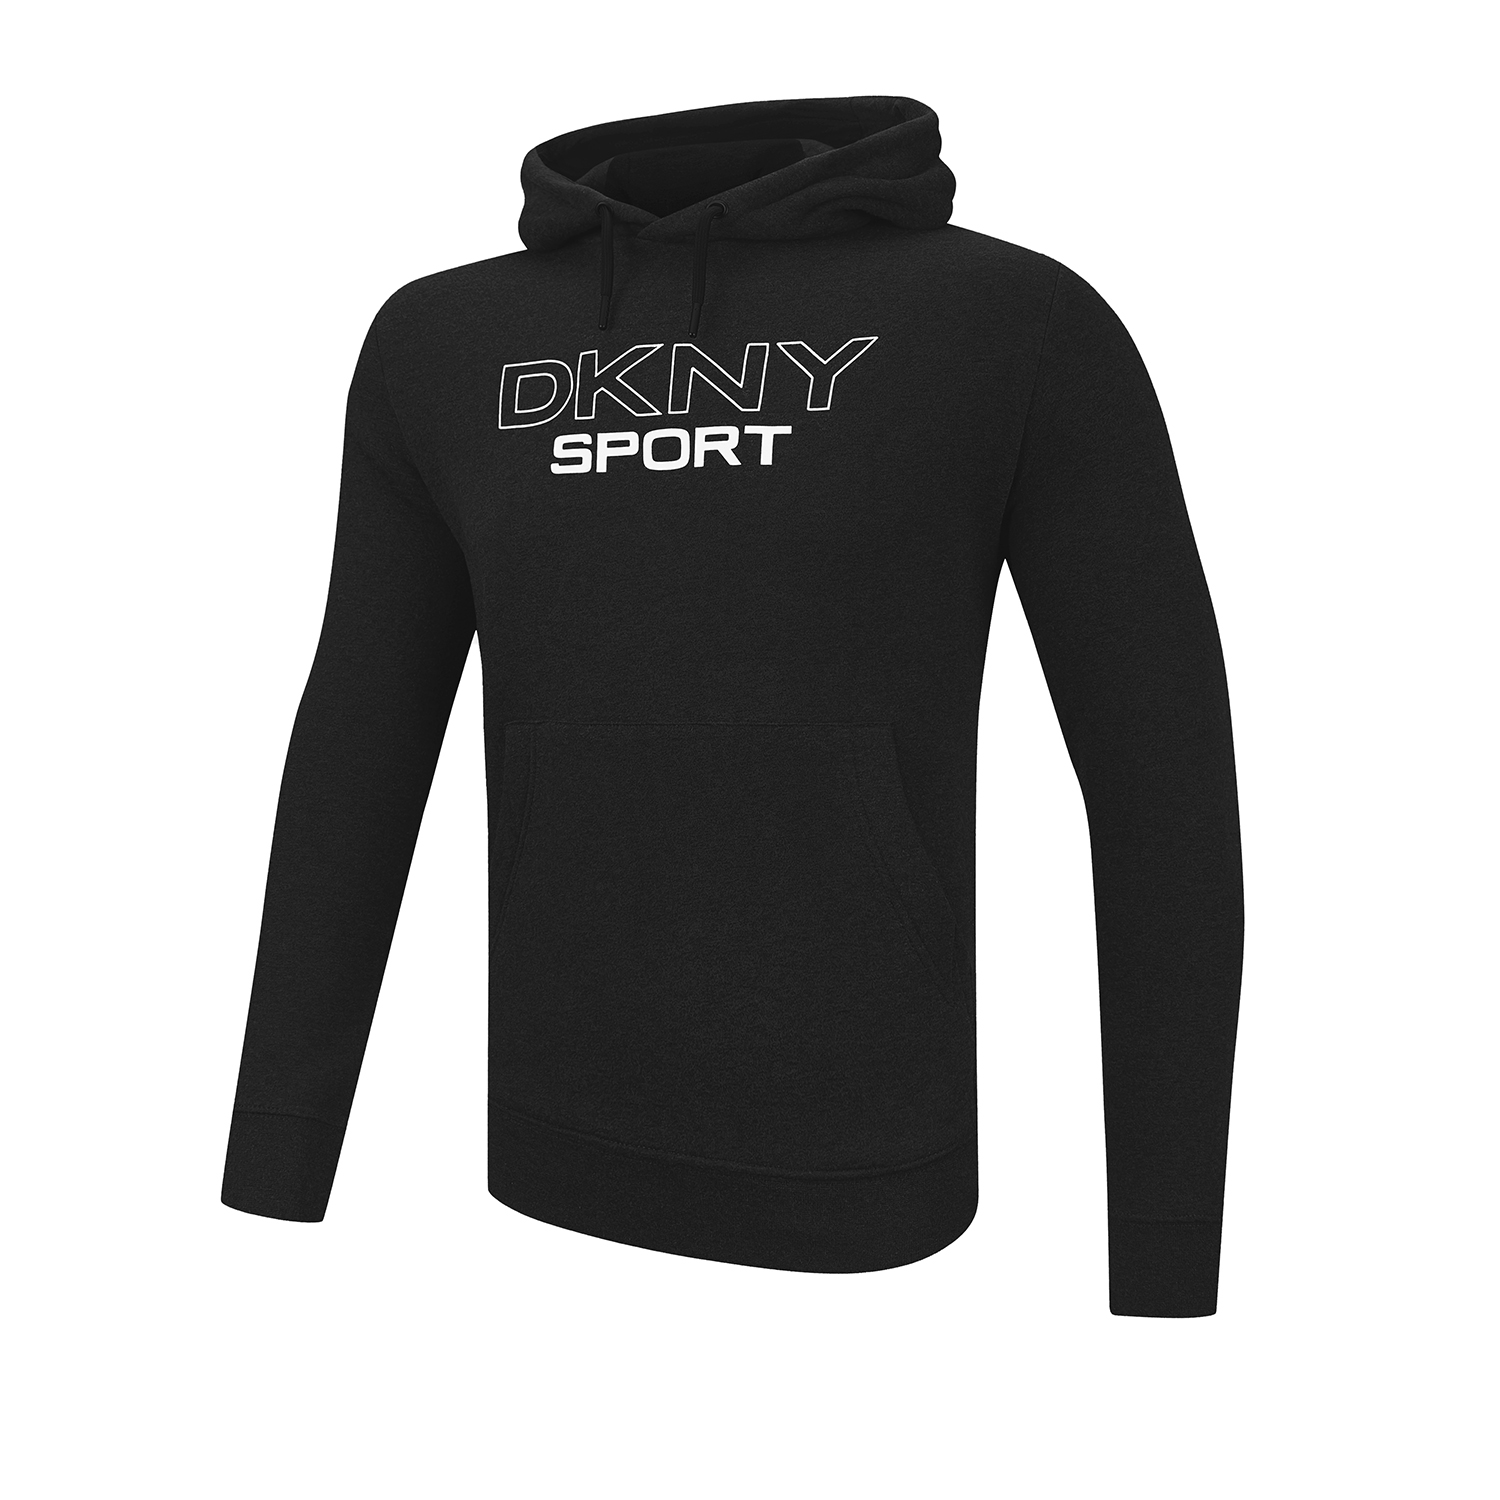 DKNY Sports Clothing, Sportswear